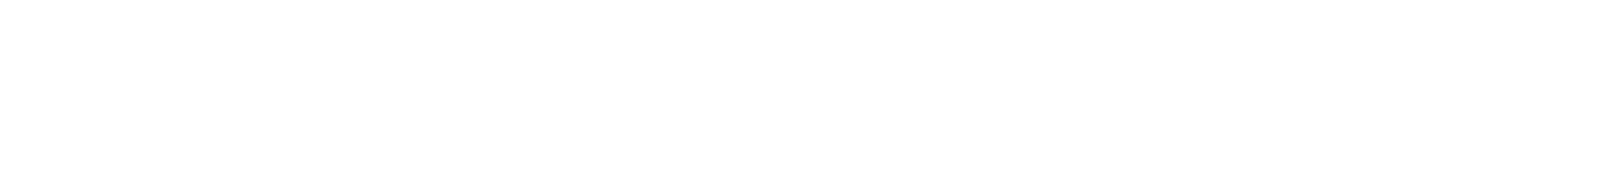 Meta (Facebook) logo grand pour les fonds sombres (PNG transparent)